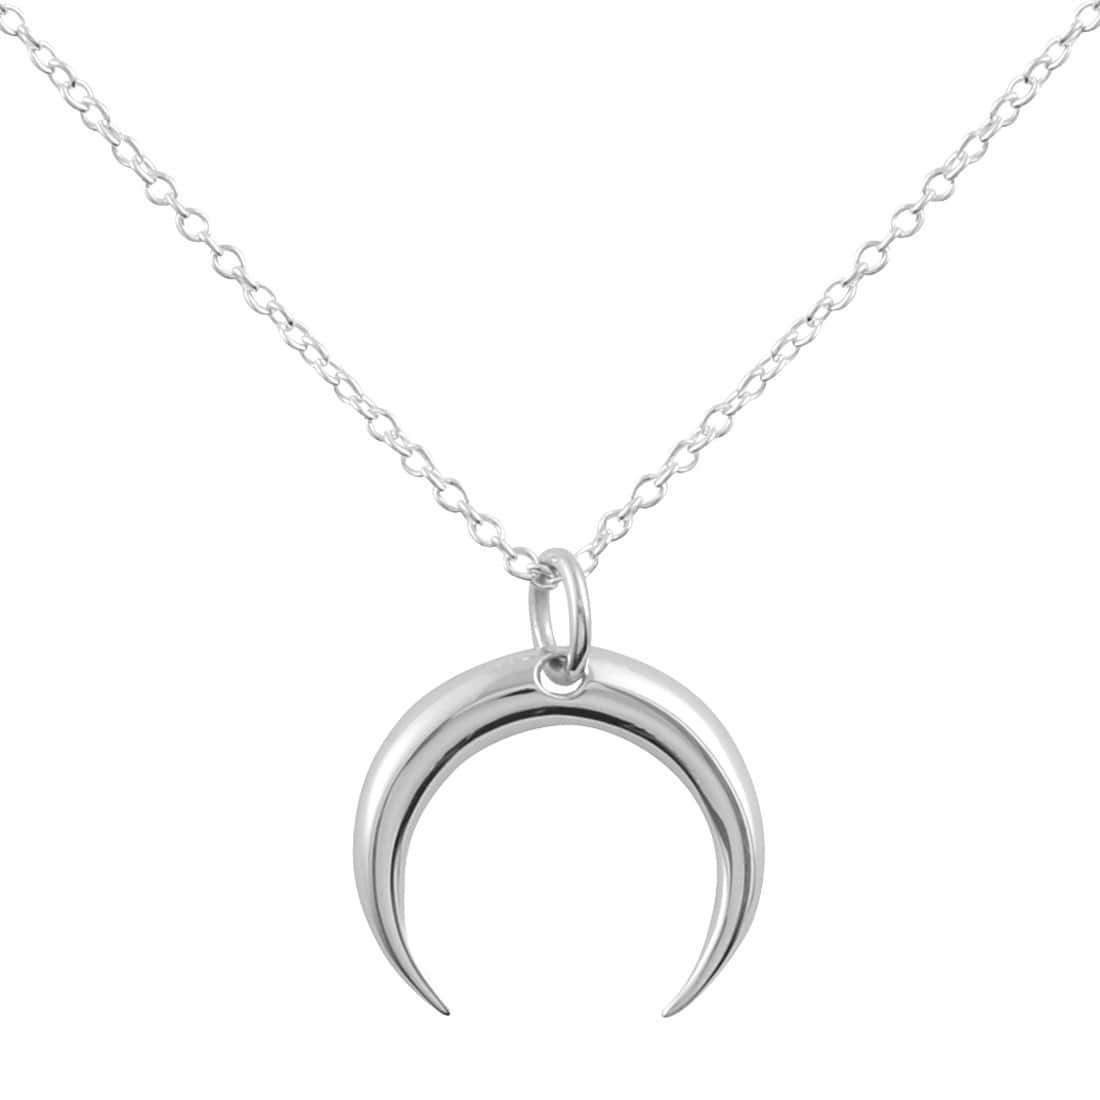 Midsummer Star Necklaces Necklace (42 + 5cm Extender) Crescent Moon Necklace